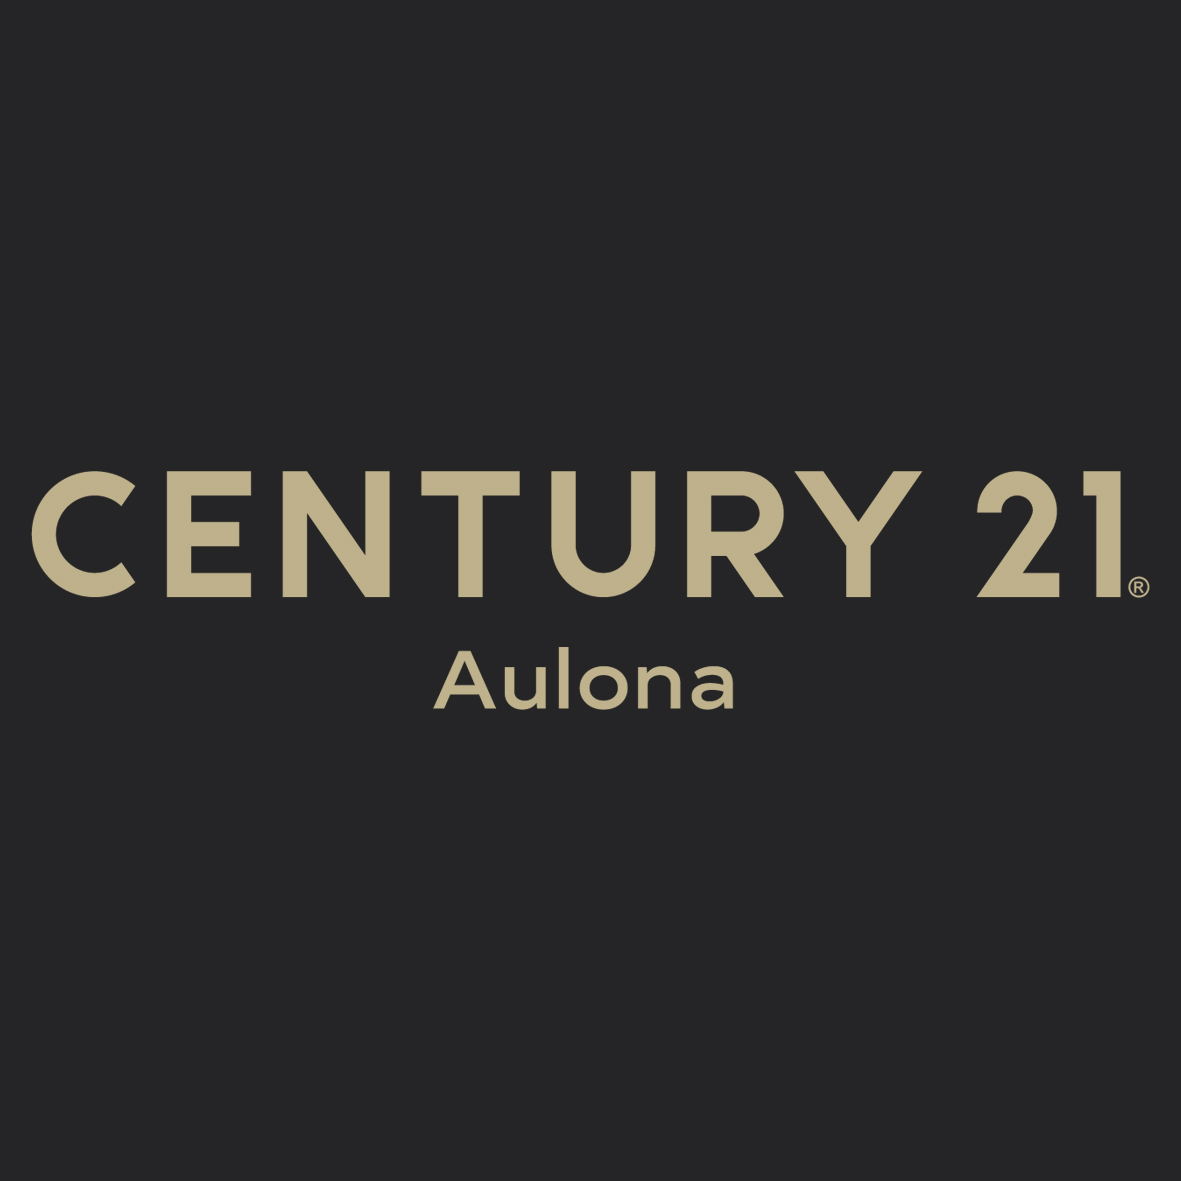 CENTURY 21 Aulona